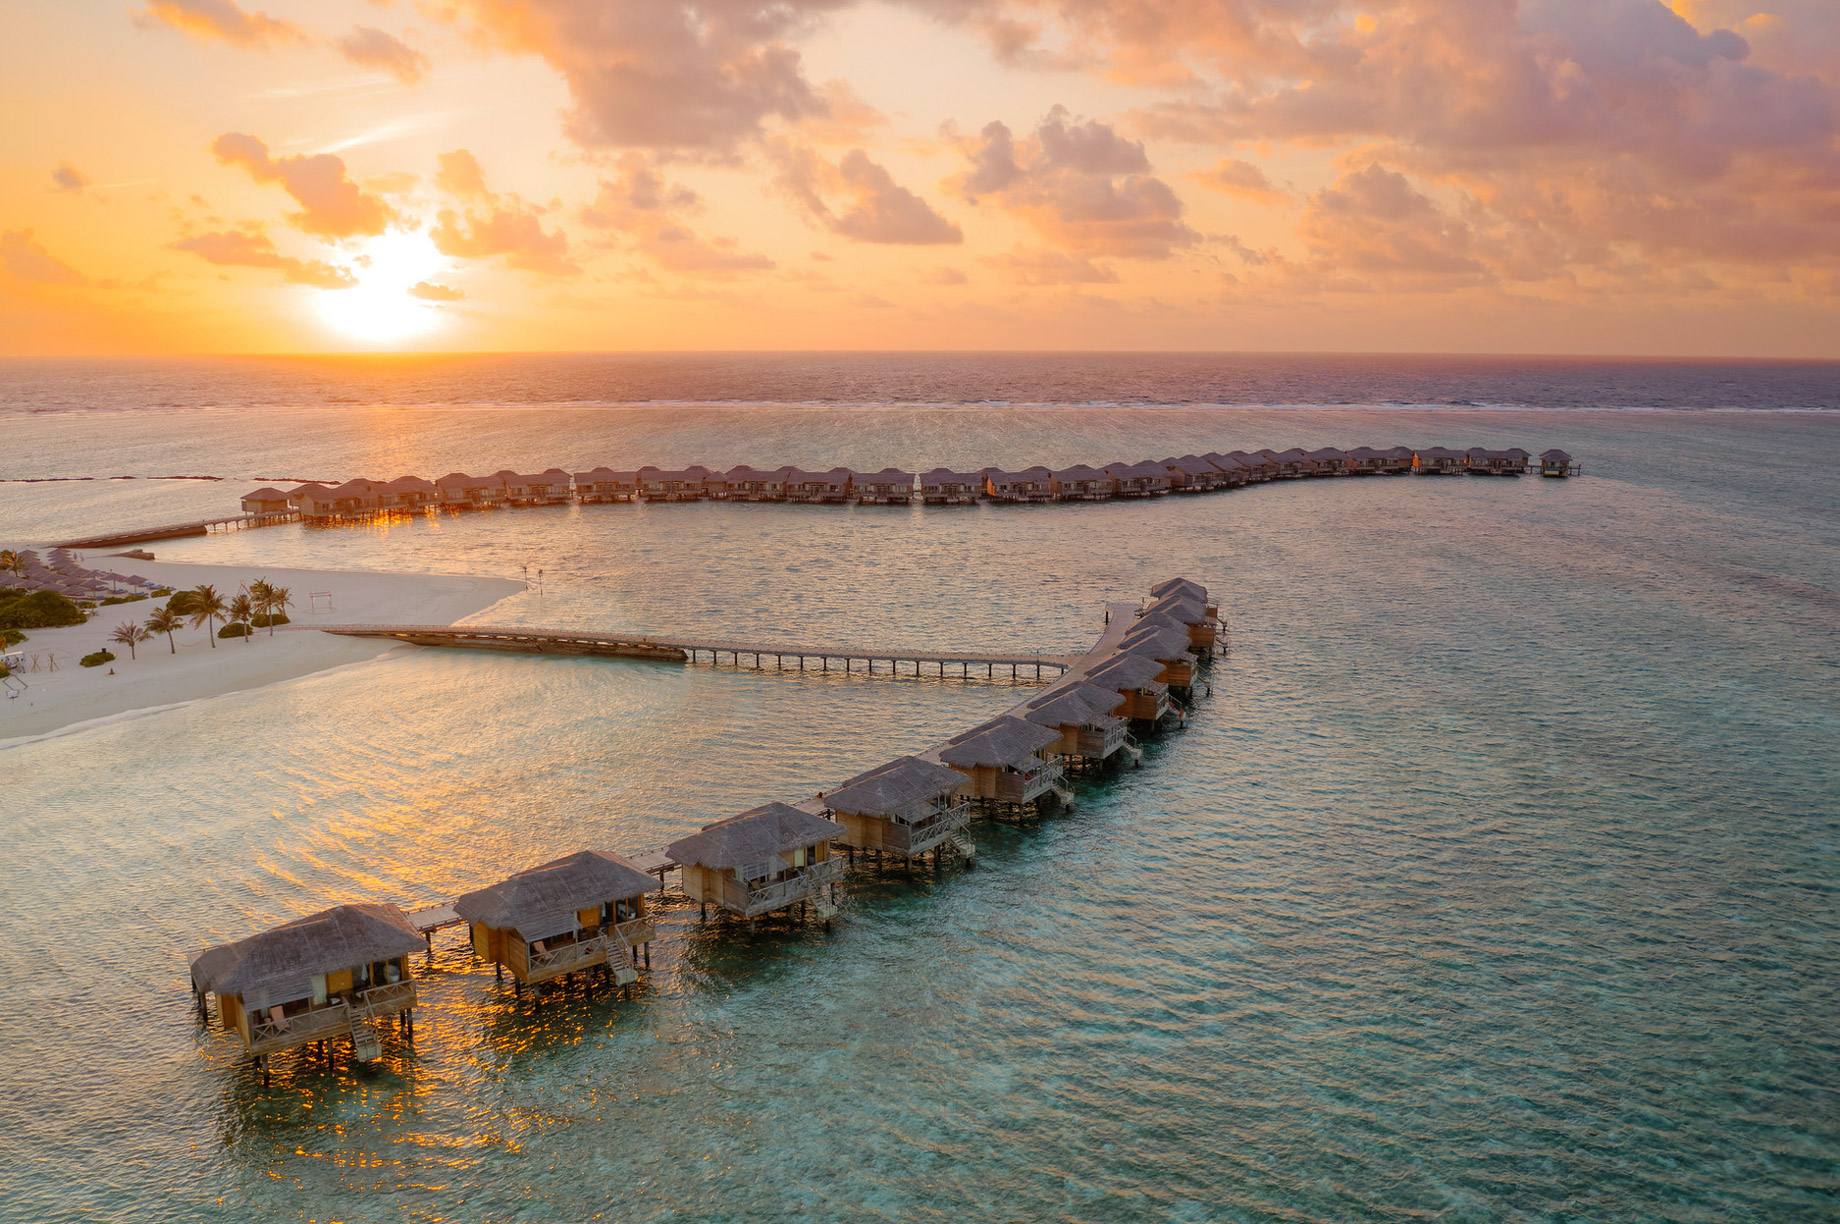 You & Me Maldives Resort – Uthurumaafaru, Raa Atoll, Maldives – Overwater Villa Sunset Aerial View